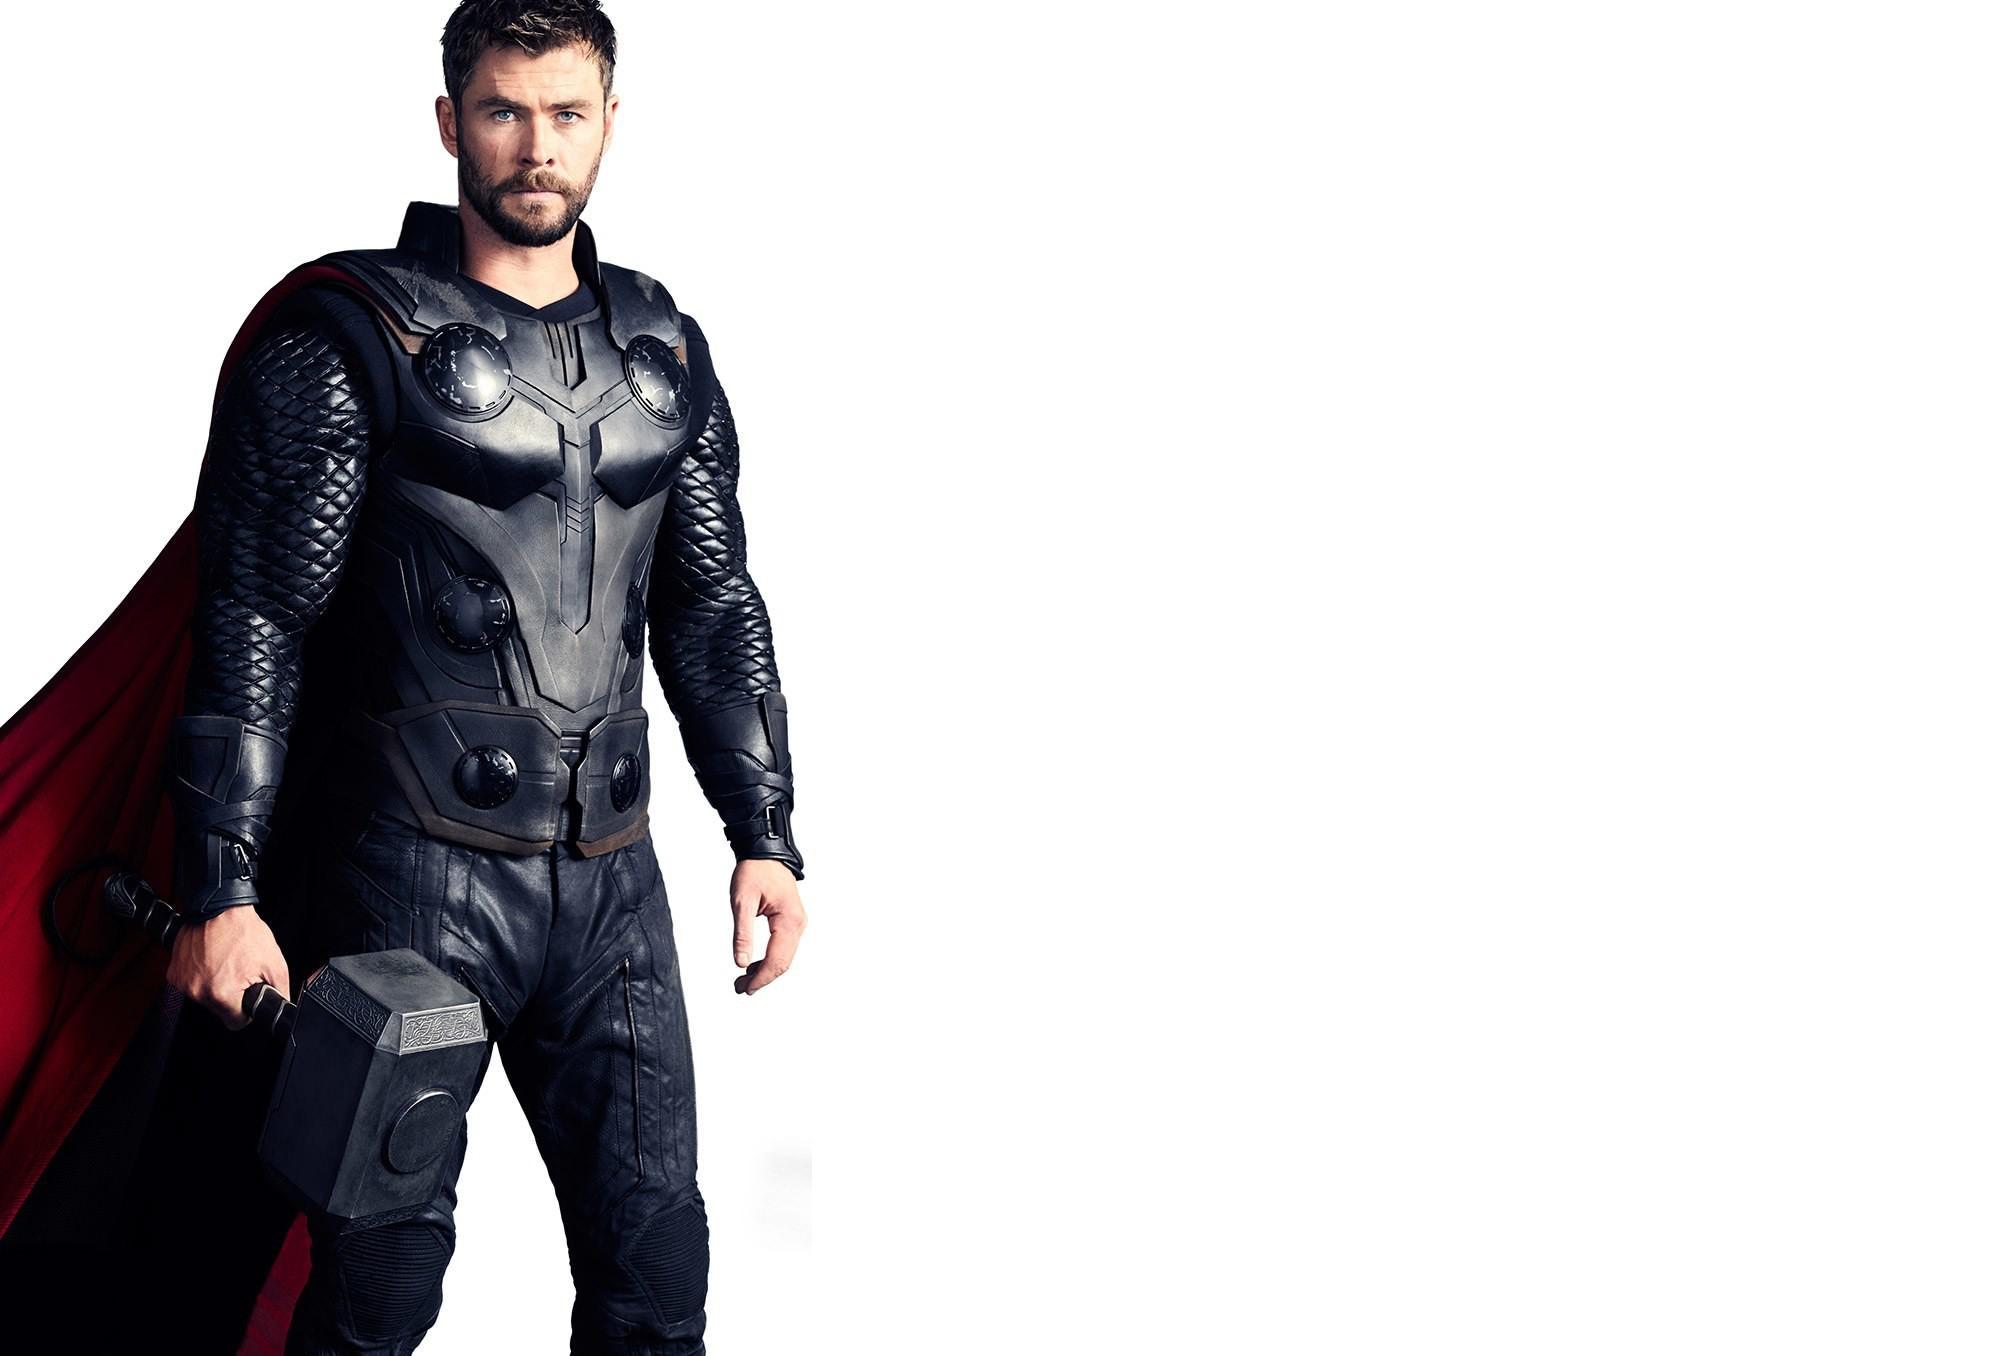 Chris Hemsworth As Thor In Avengers Wallpaper, HD Movies 4K